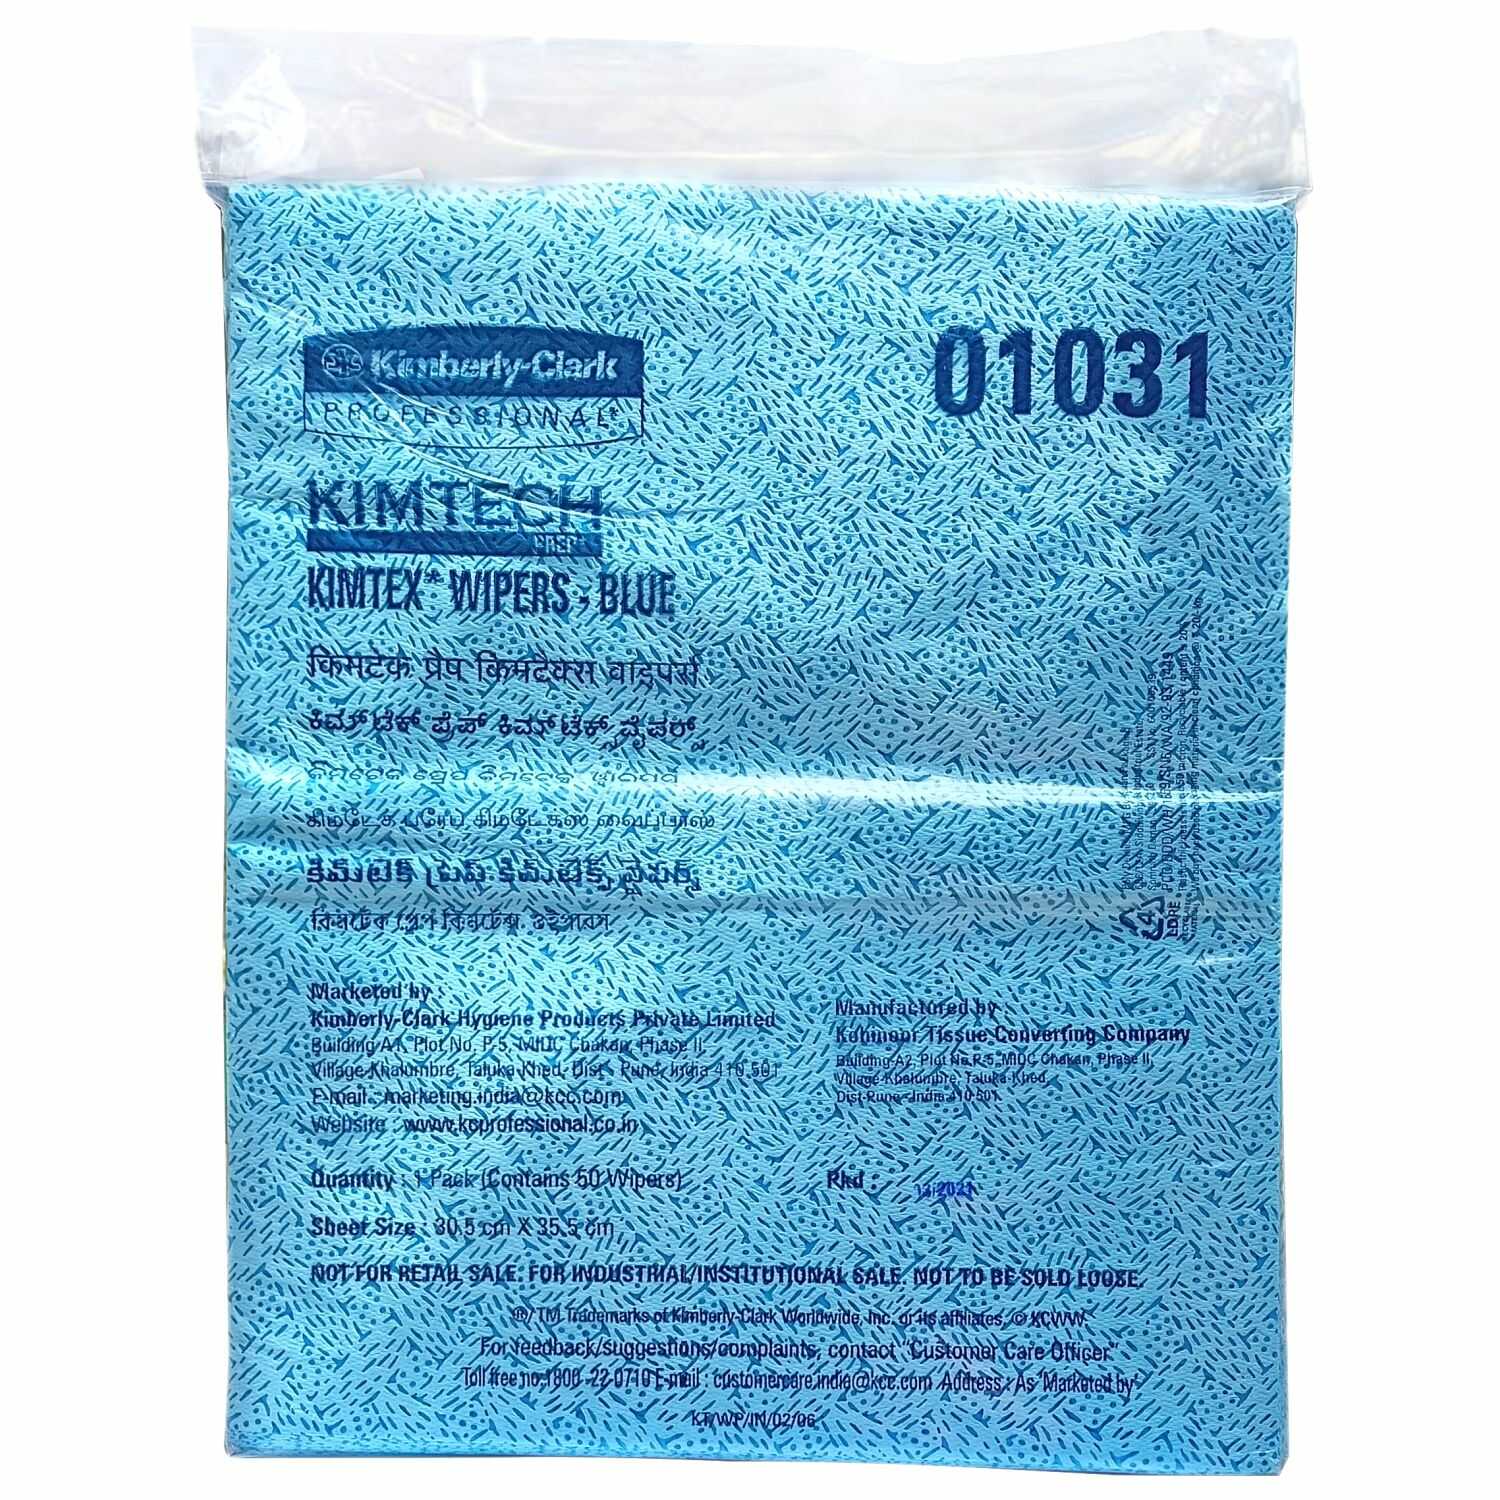 KIMTECH PREP* KIMTEX* Wipers / Flat Sheet /Blue / 30.5 cm x 35.5 cm, 01031 (Pack of 8 )